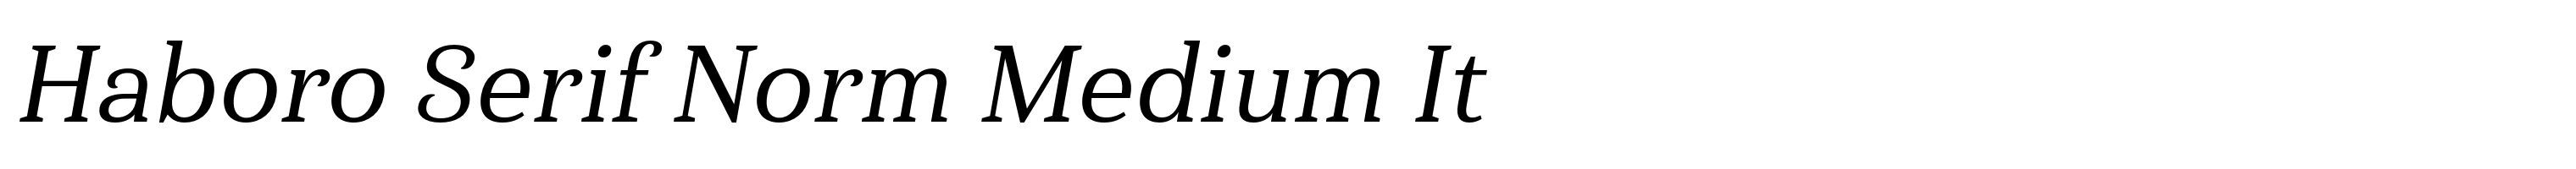 Haboro Serif Norm Medium It